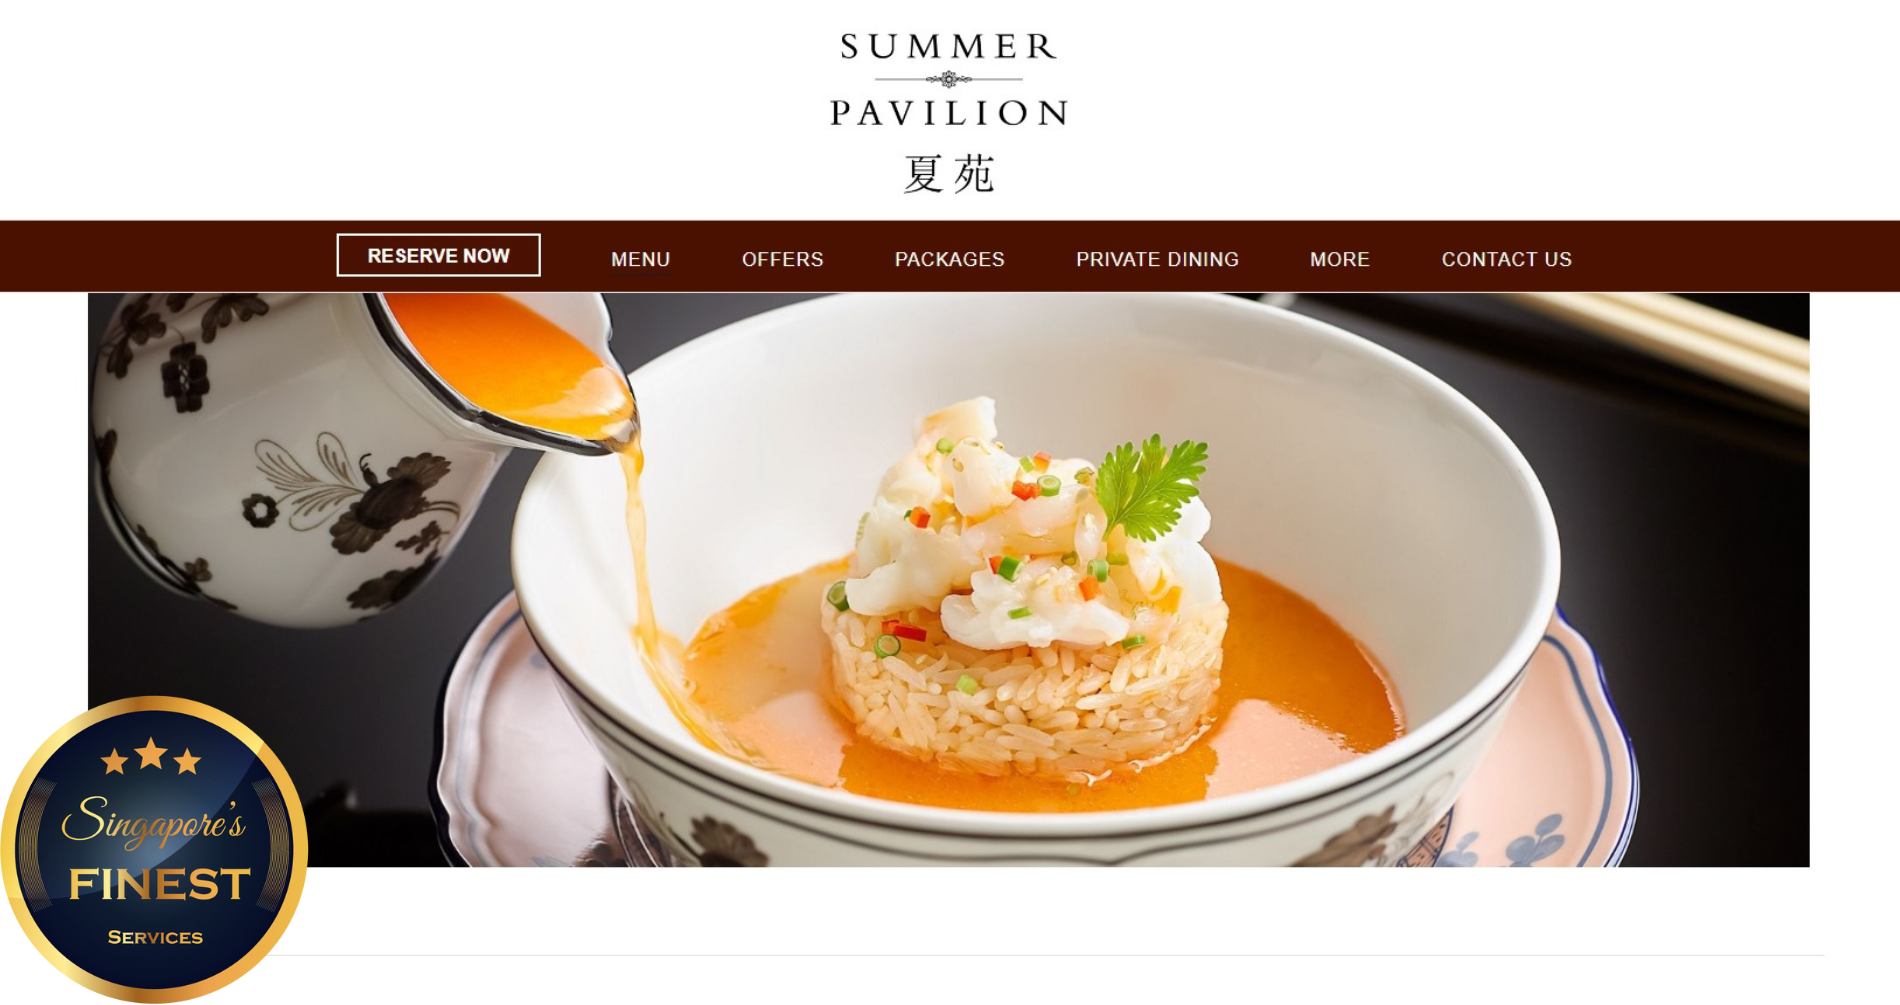 Summer Pavilion - Chinese Restaurant Singapore